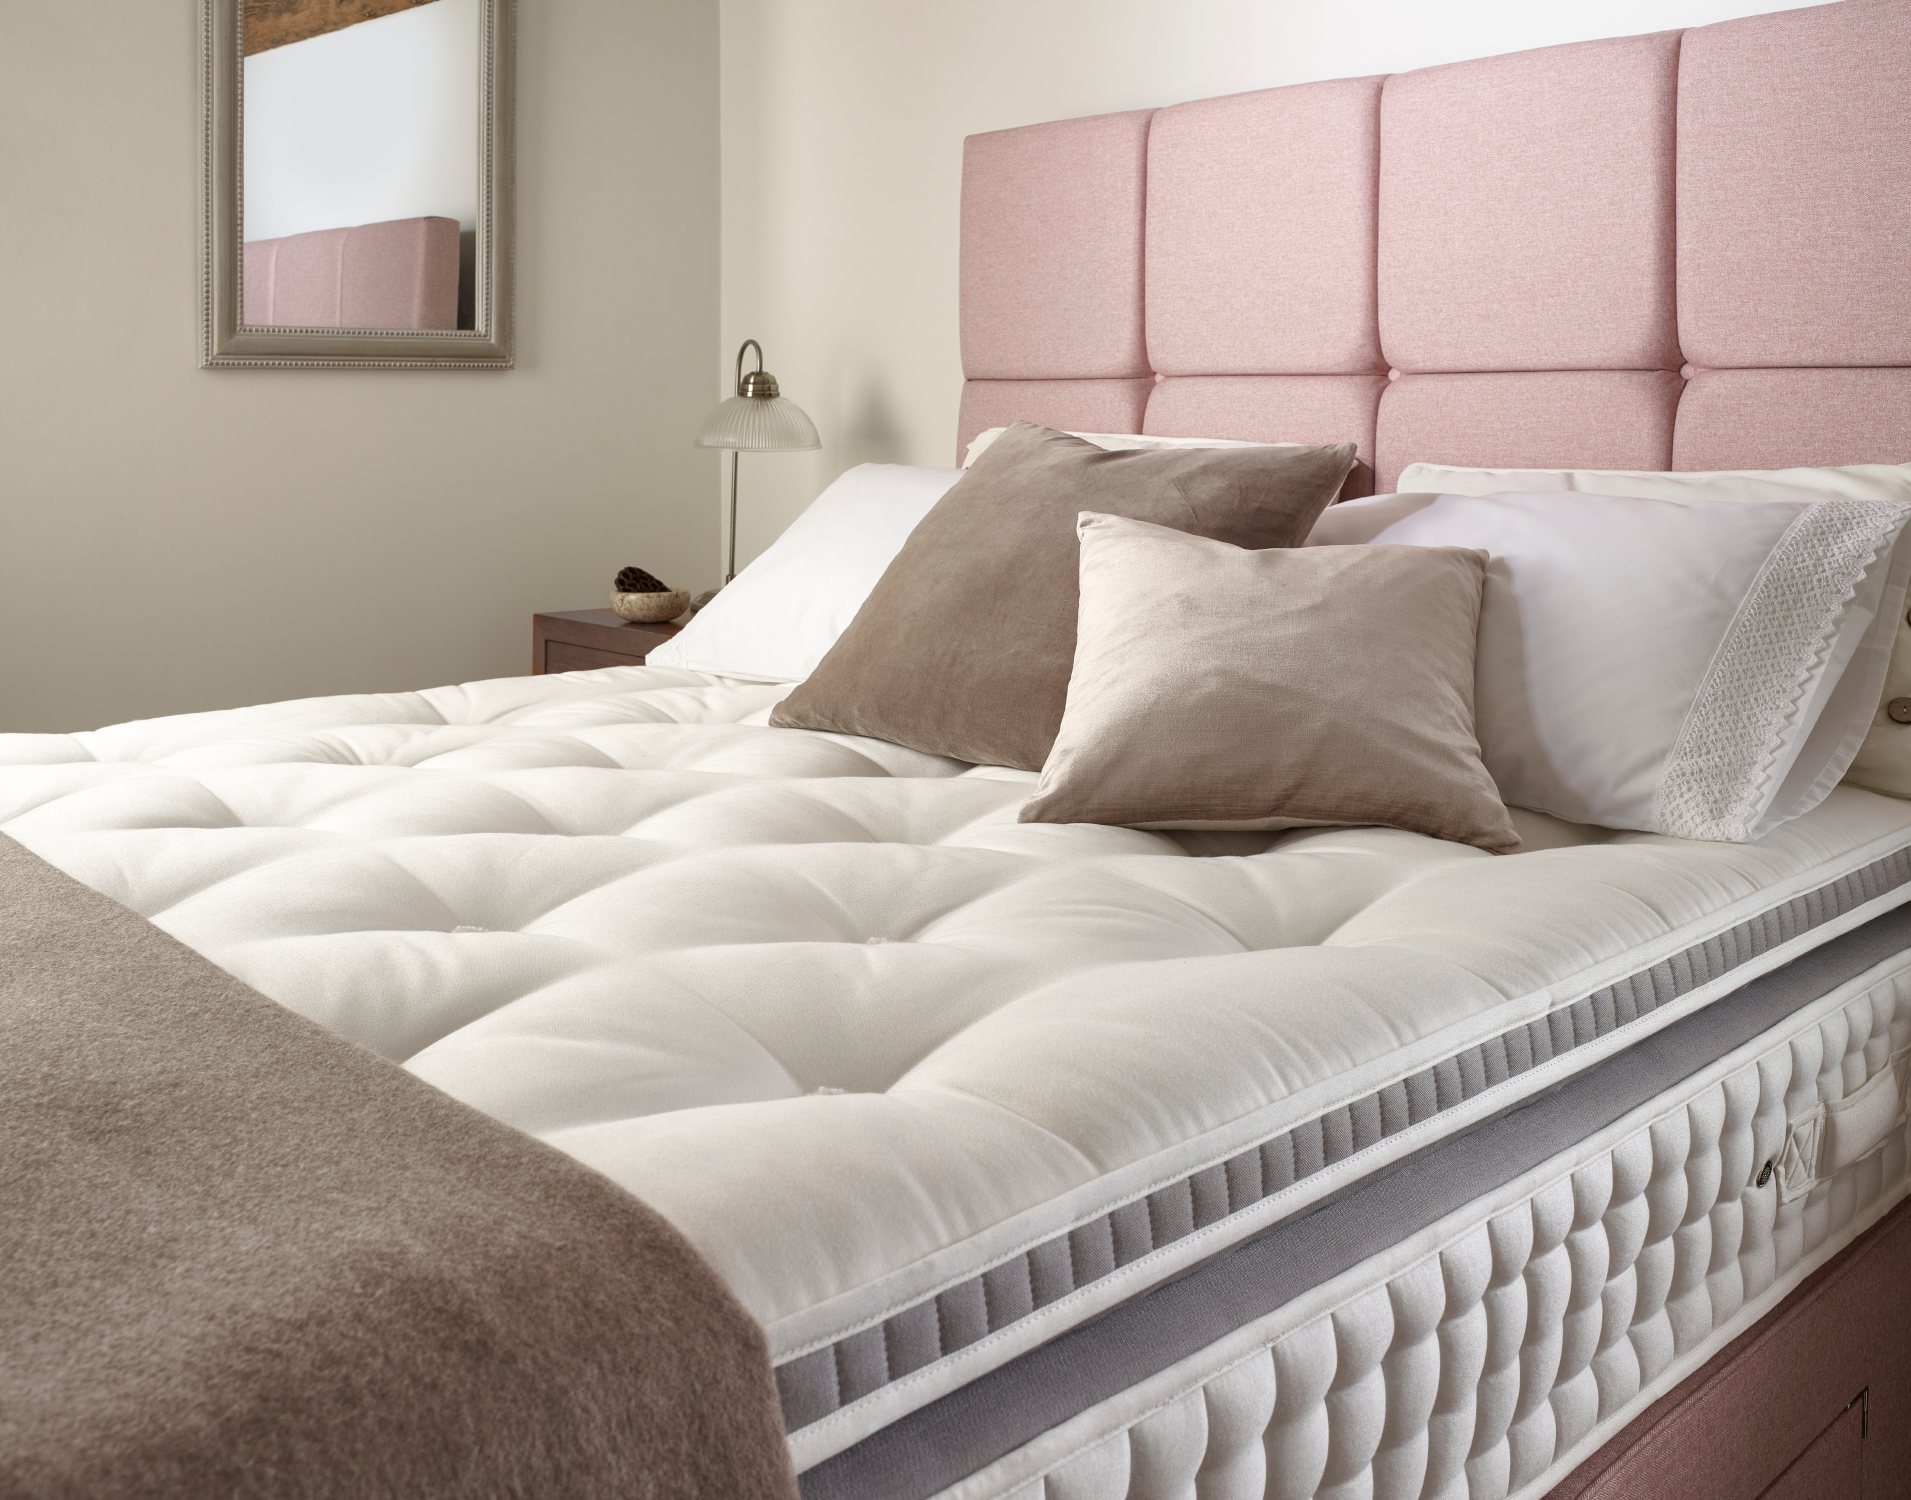 harrison ruby mattress review